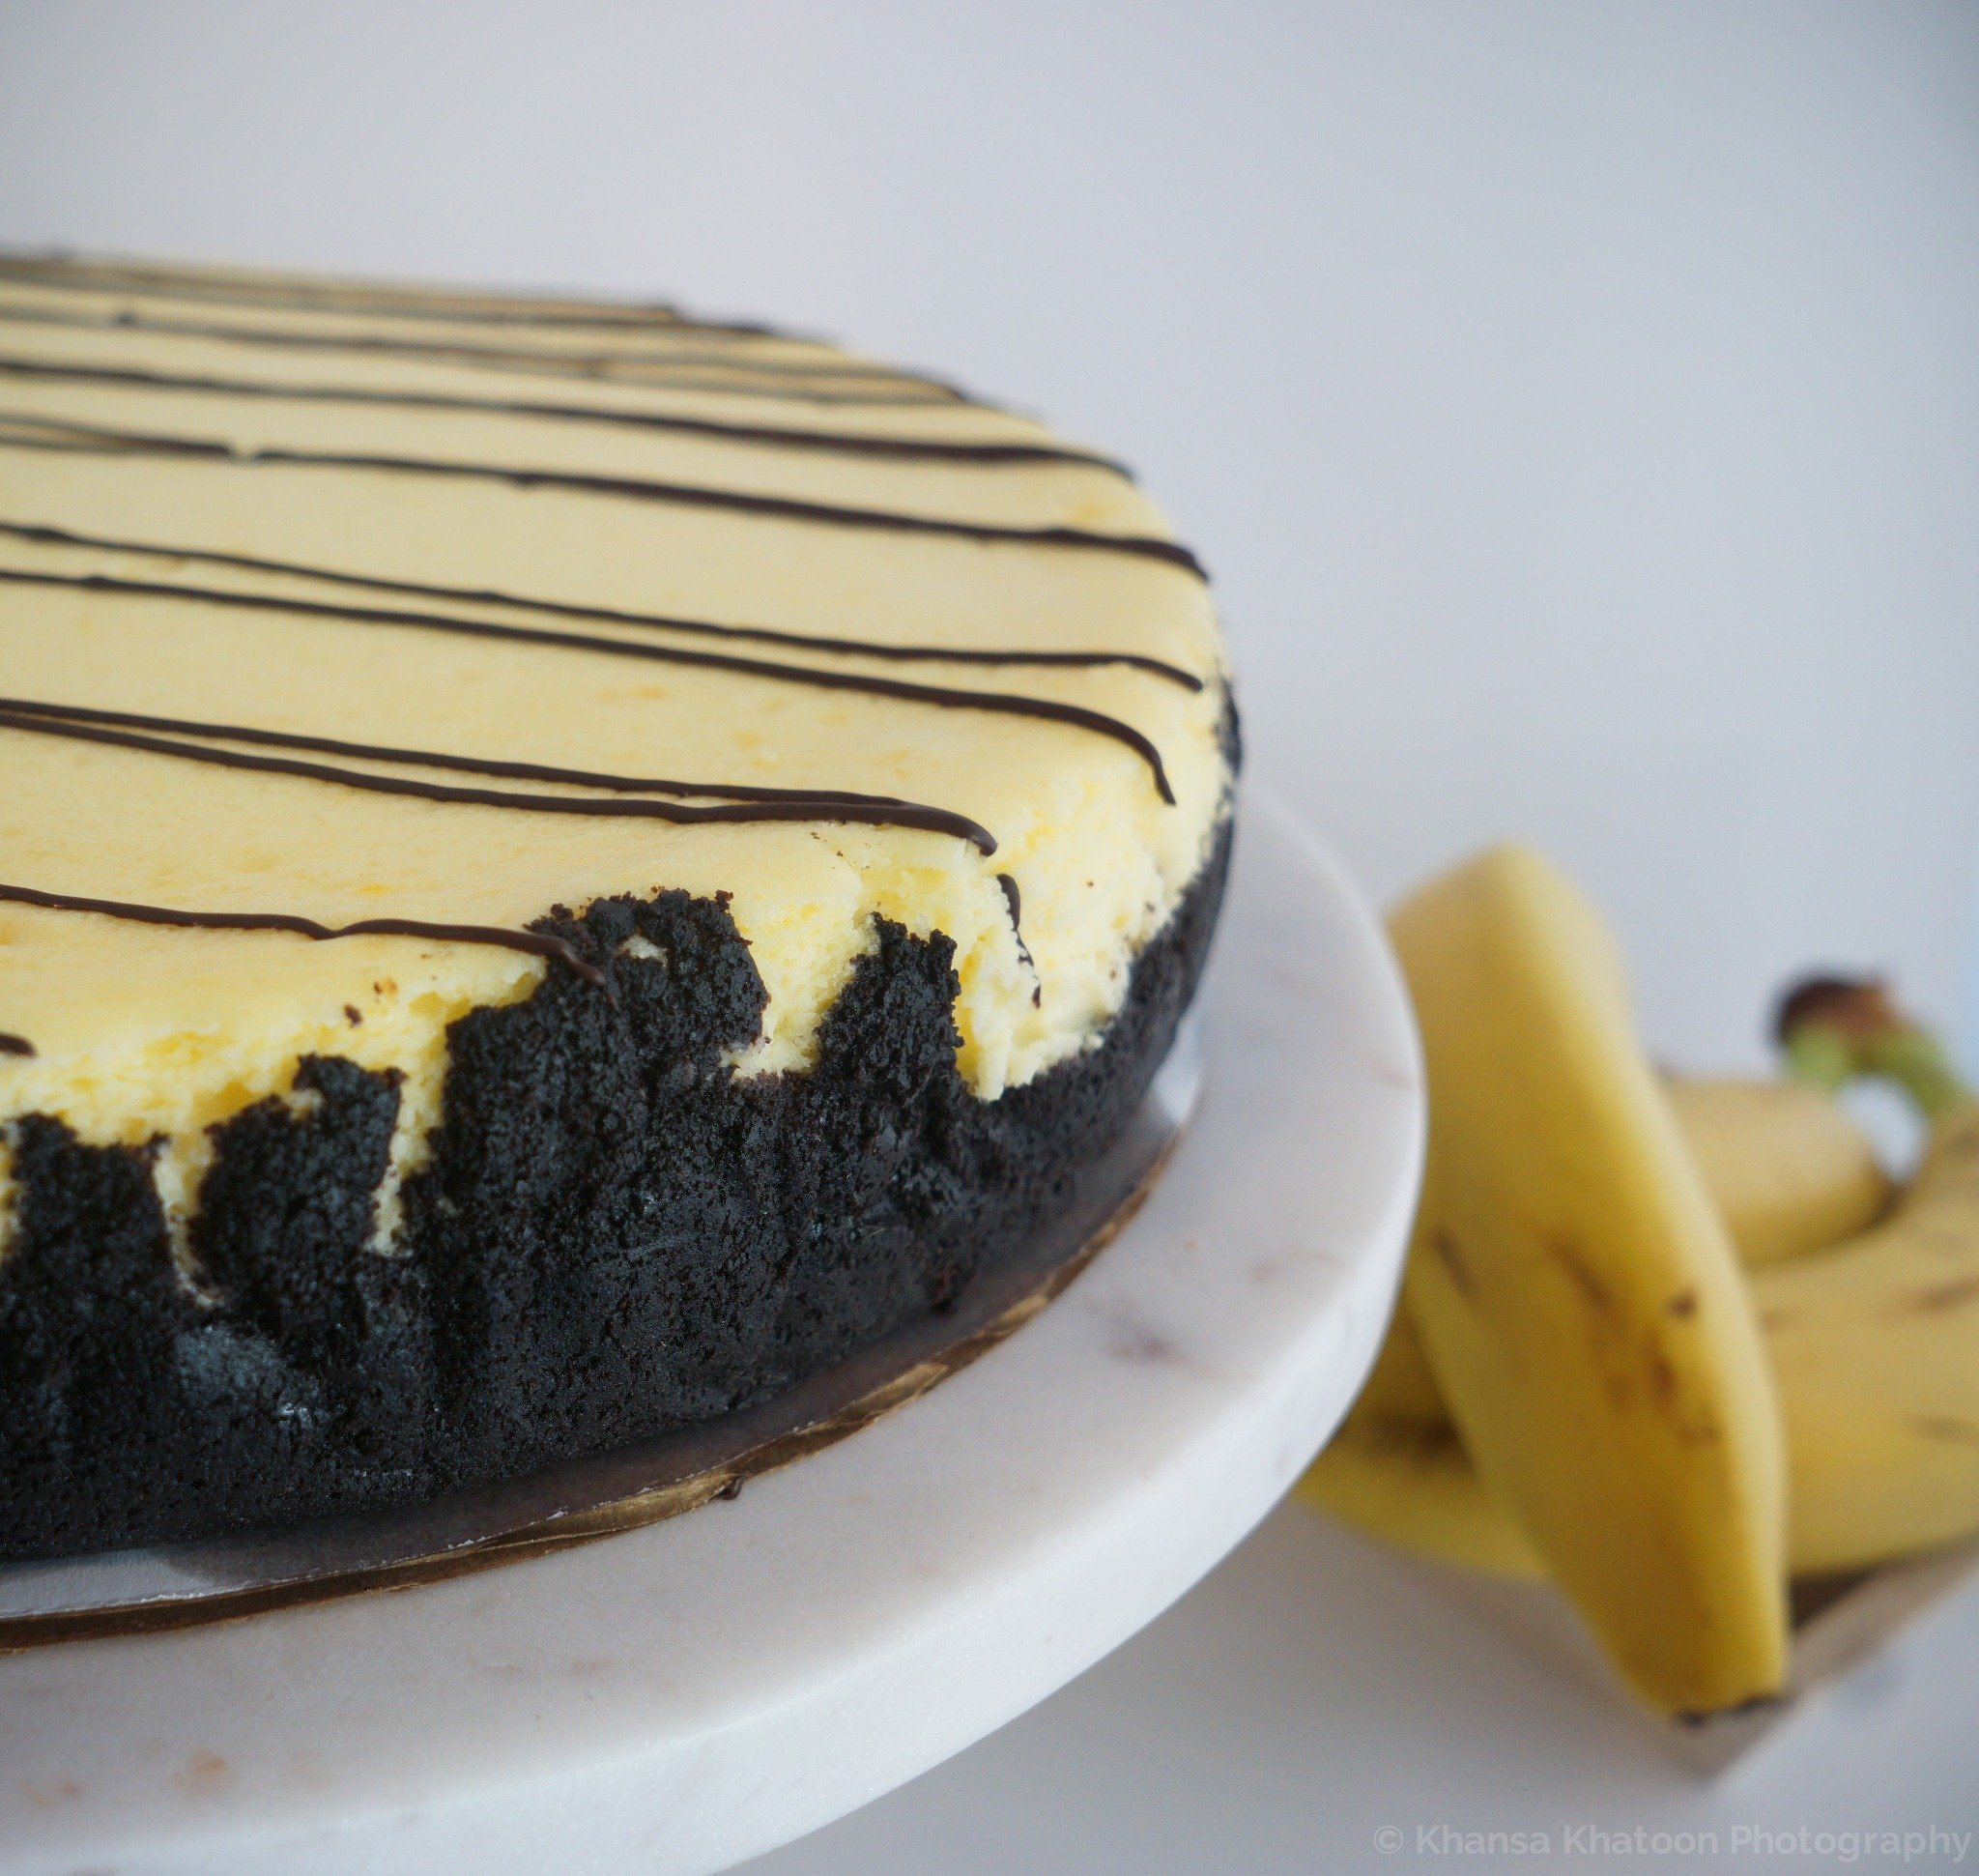 No wonder #bananacheesecake was Eileen's favorite, its so appeeling! 

https://linktr.ee/eileenscheesecake